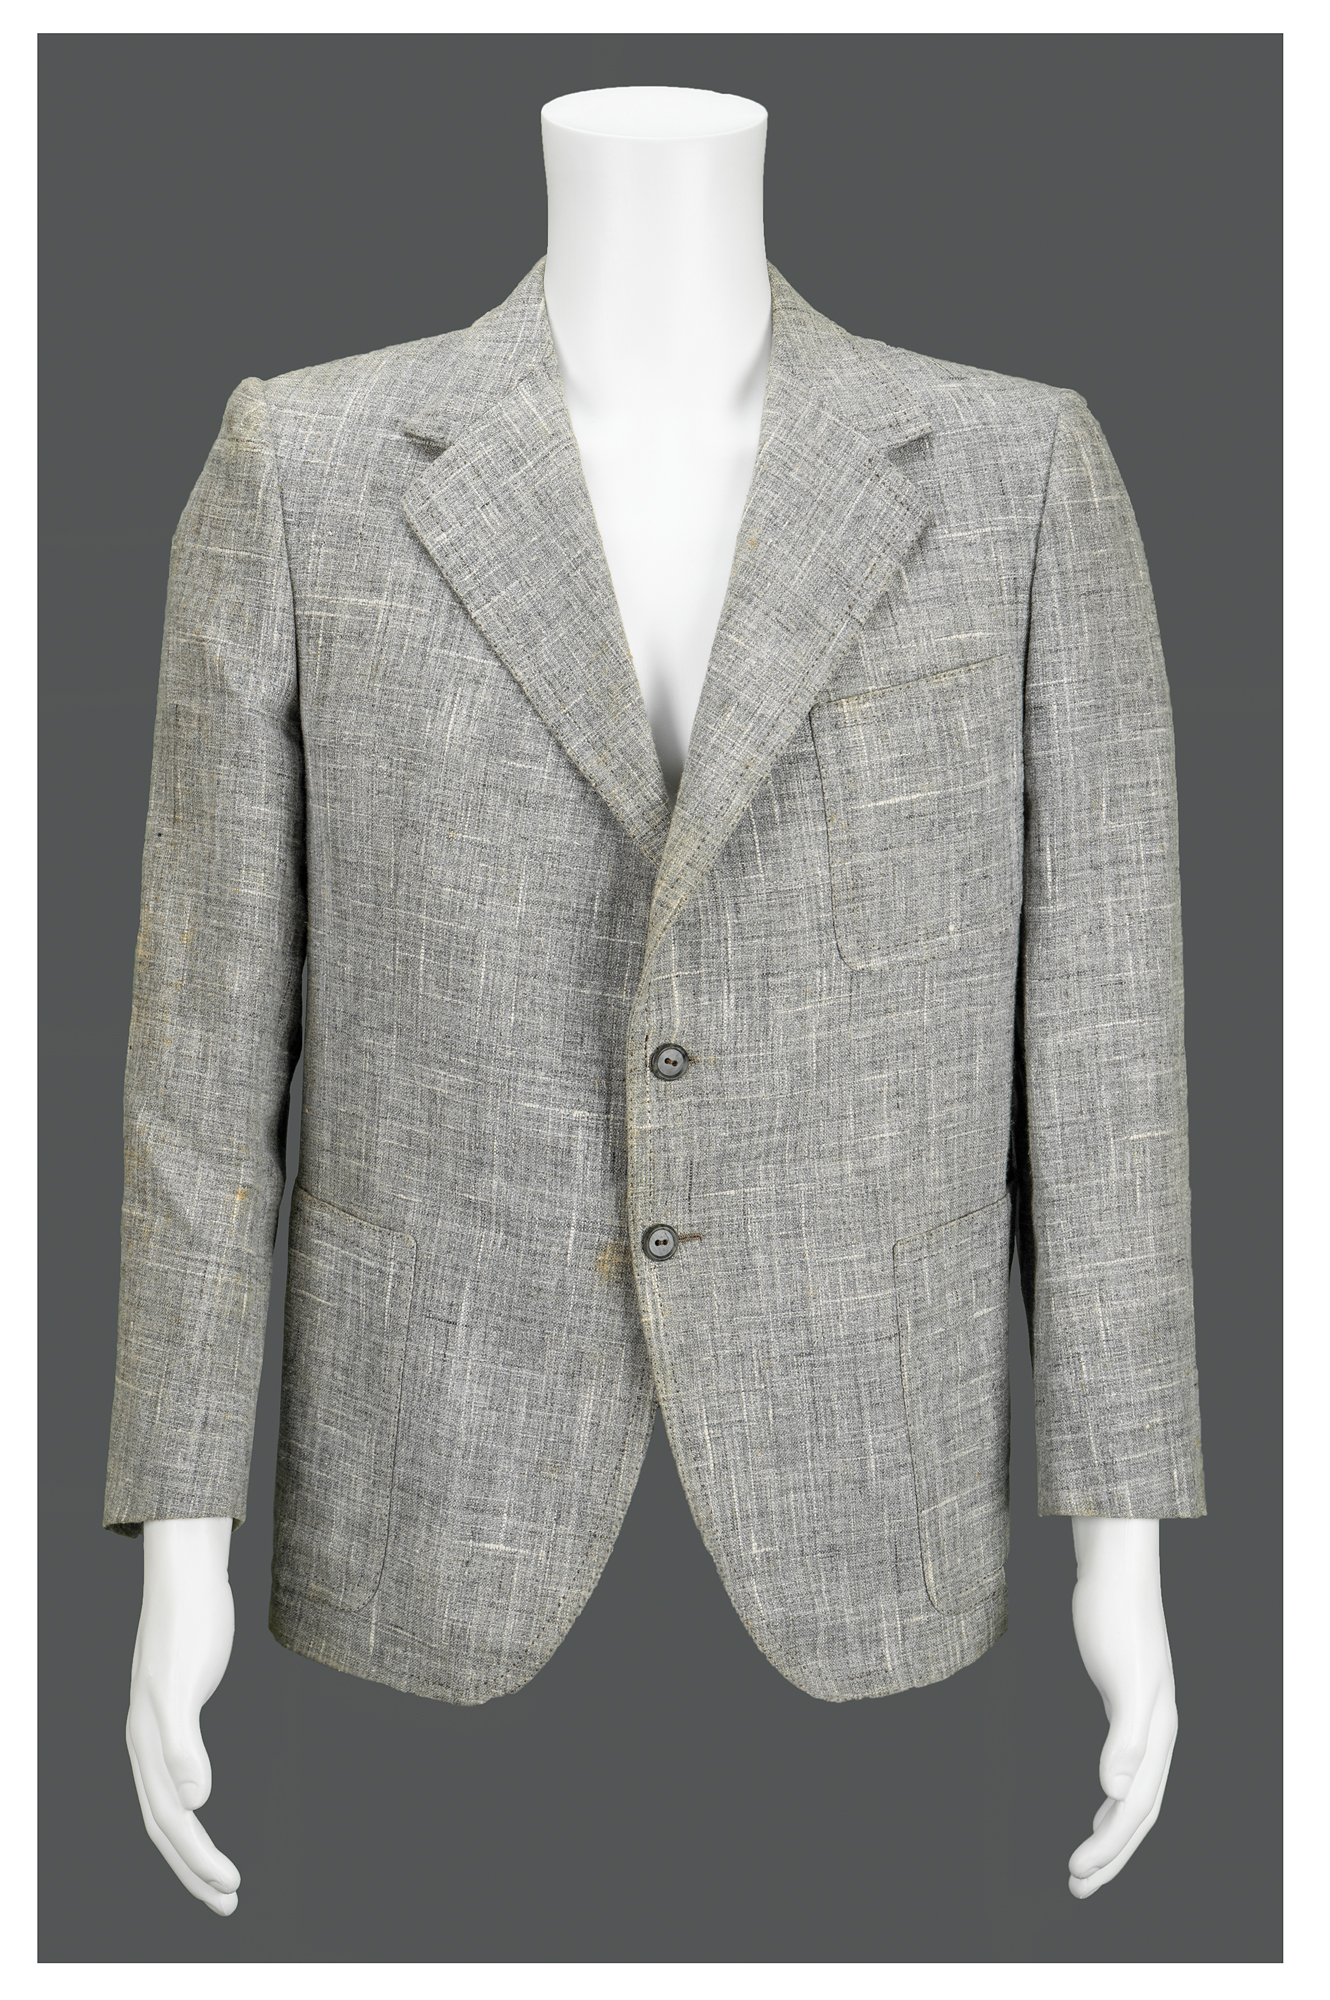 Lot #223 Meyer Lansky's Personally-Worn Gray Sport Coat